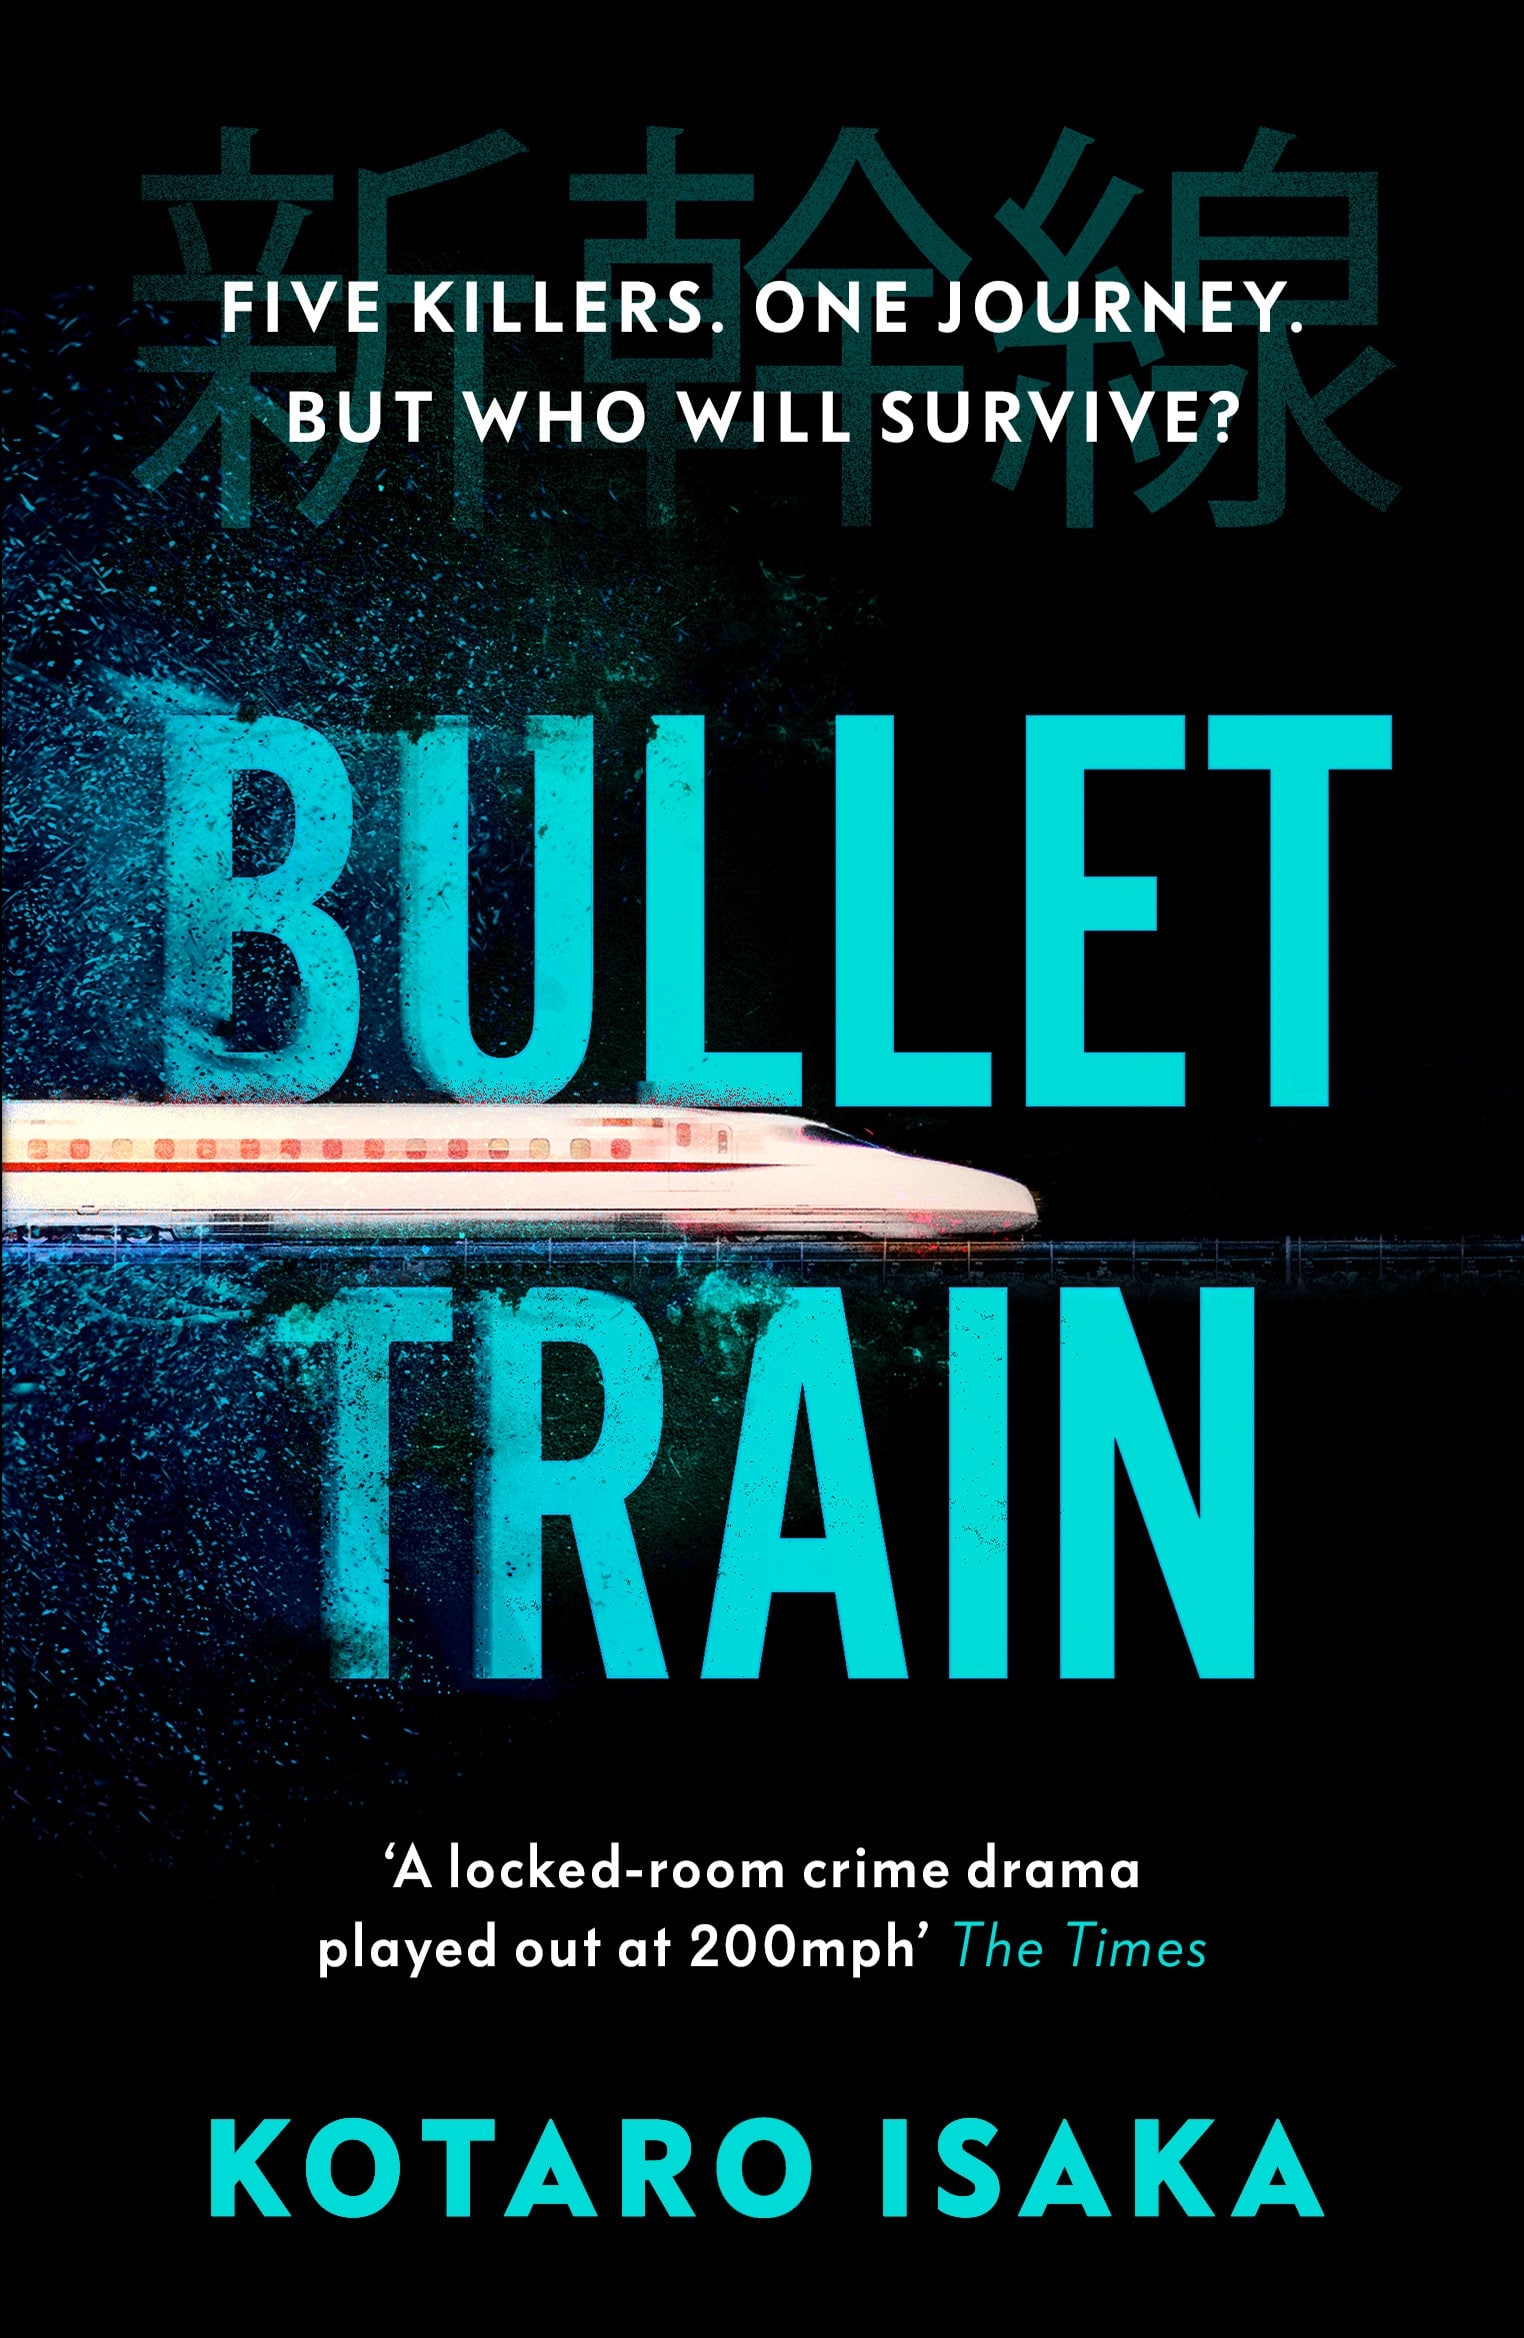 Book cover of Bullet Train by Kotaro Isaka